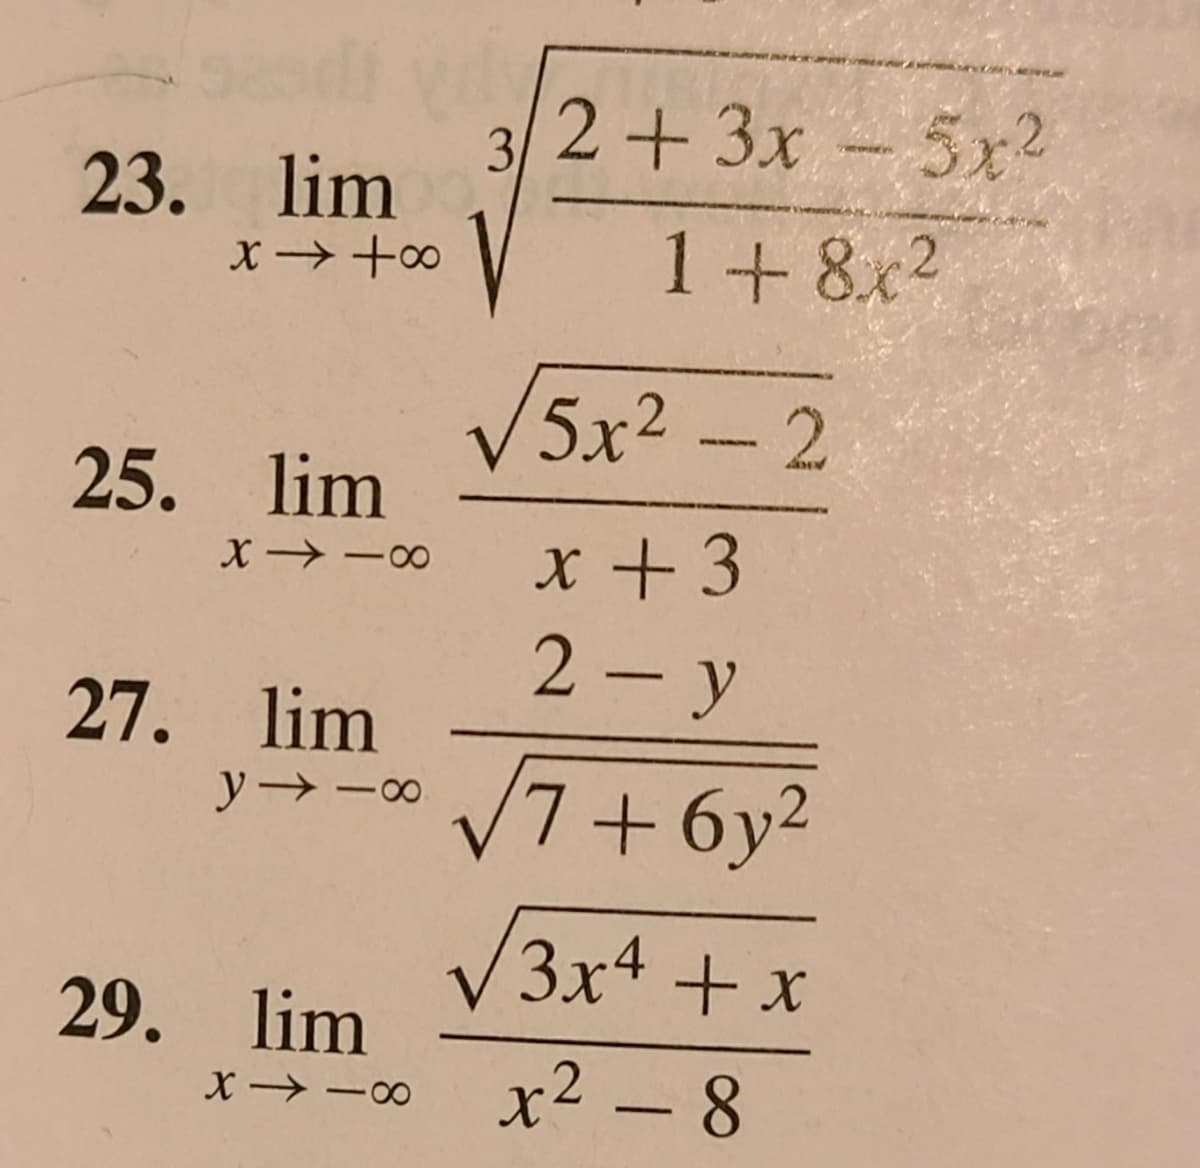 3/2 +3x
– 5x2
23. lim
x →+0
1+8x2
/5x2-2
www.
25. lim
x +3
X→ -00
2- y
27. lim
V7+6y2
ソ→-0
V3x4 + x
29. lim
X → -00
x² – 8
